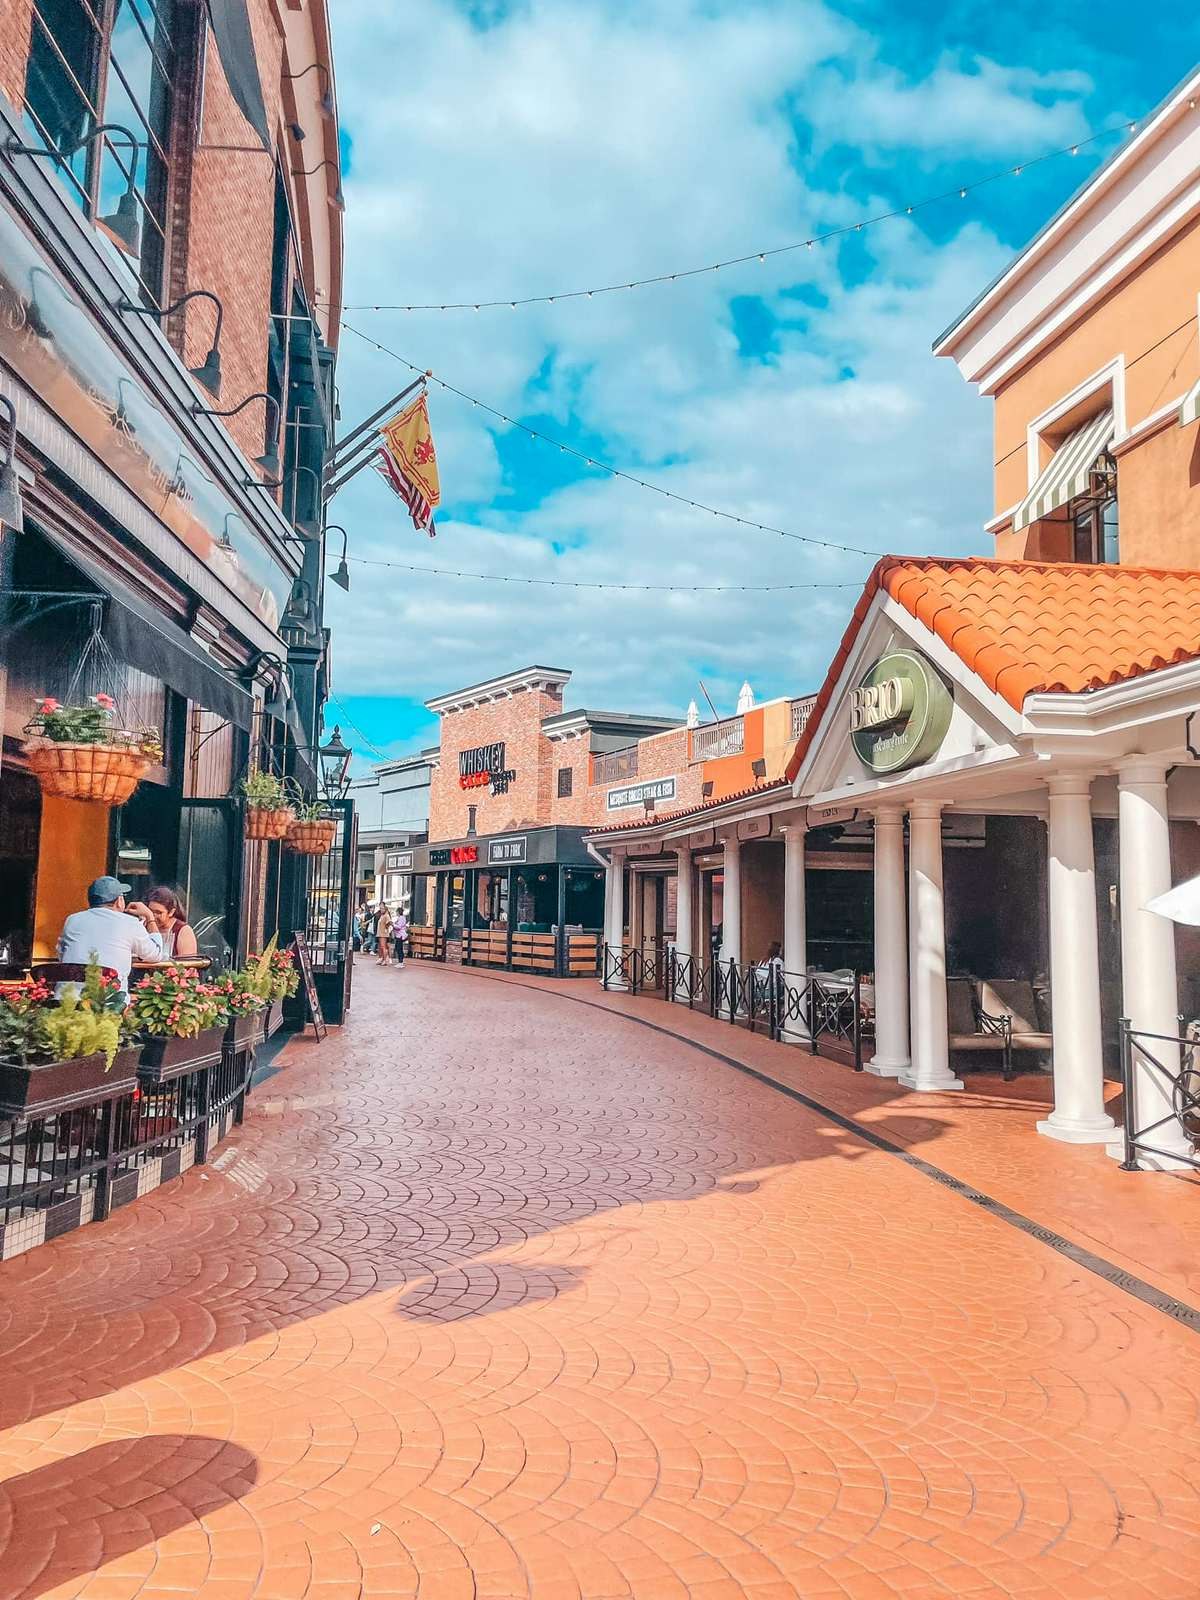 Tampa International Bay Street and Plaza shopping center